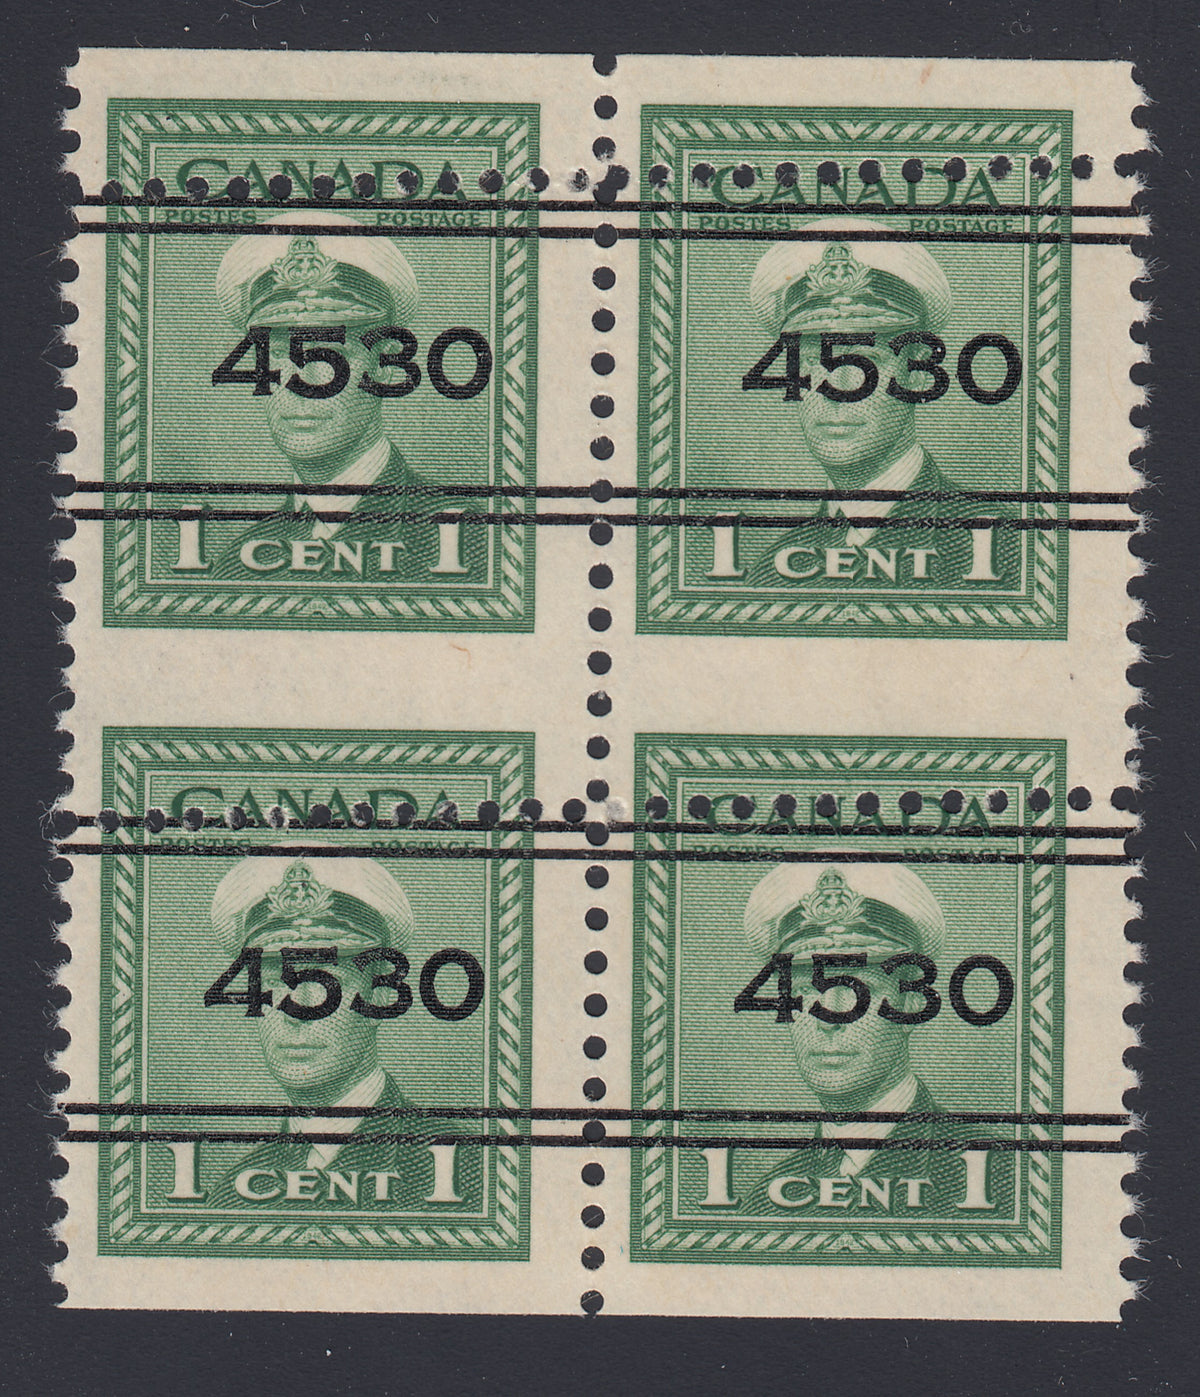 0249CA1802 - Canada #249 - Mint Block of 4, Dramatic MISS-PERF